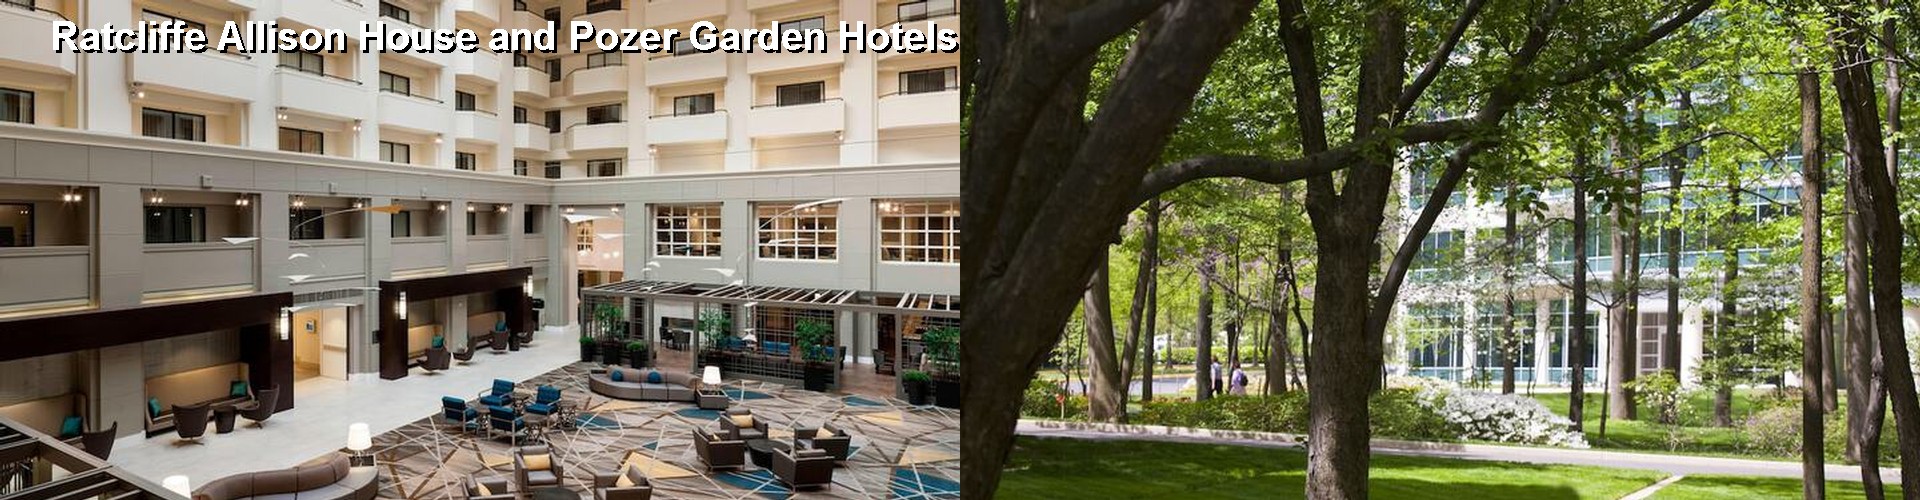 5 Best Hotels near Ratcliffe Allison House and Pozer Garden